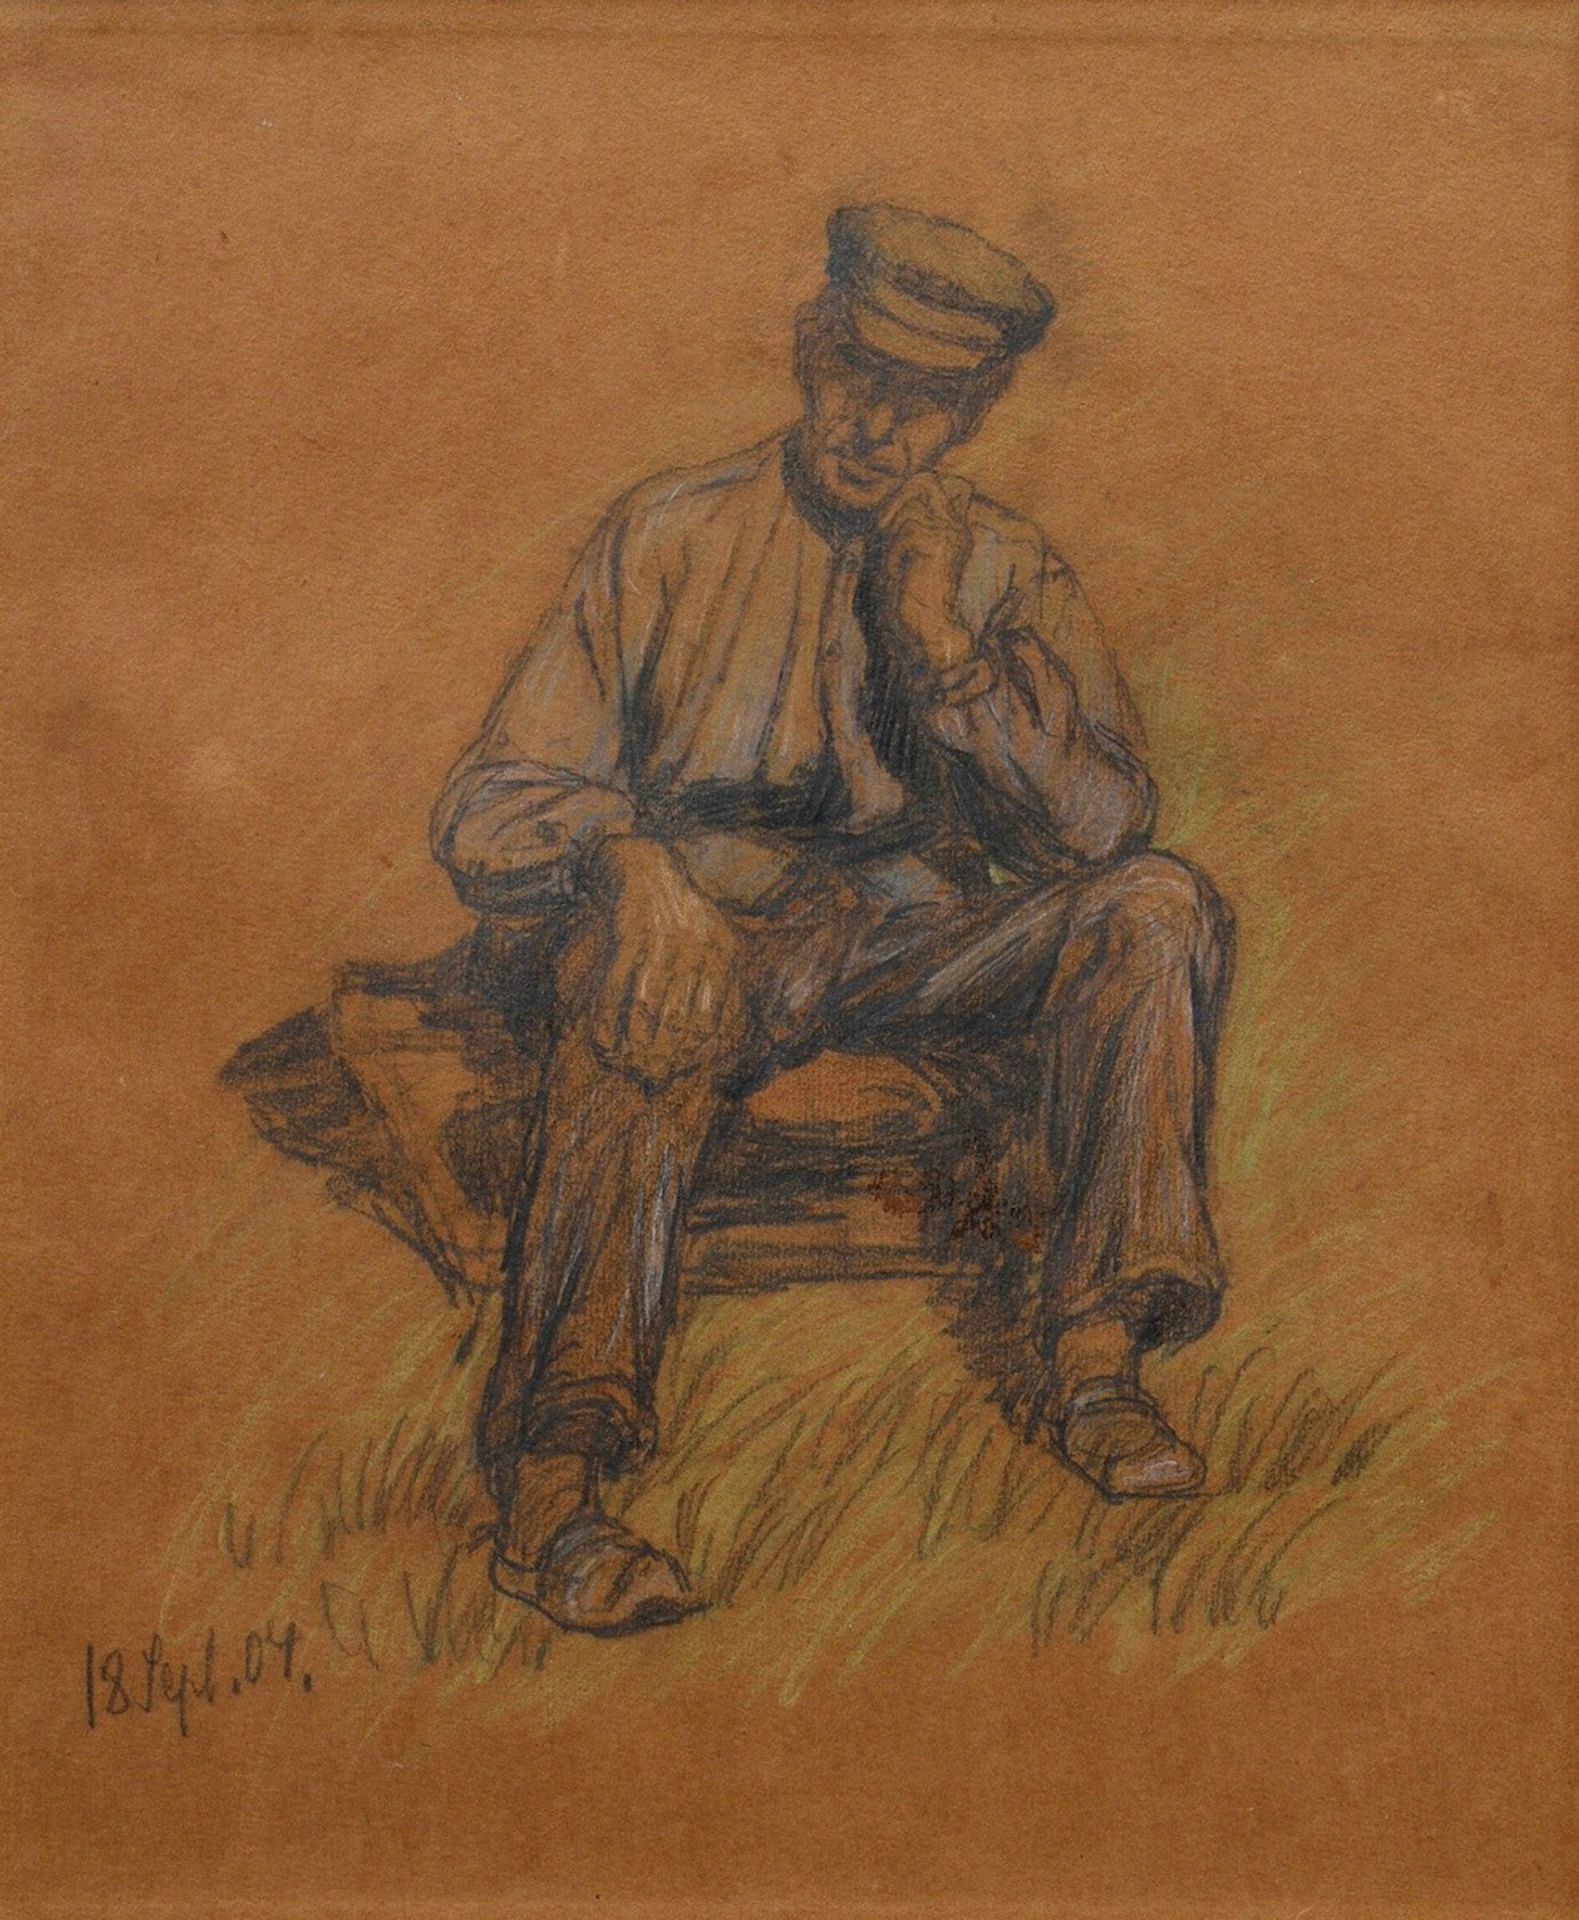 Schwinge, Friedrich Wilhelm (1852-1913) attributed "Sitting fisherman" 1904, b.l. dat. "18. Sept. 0